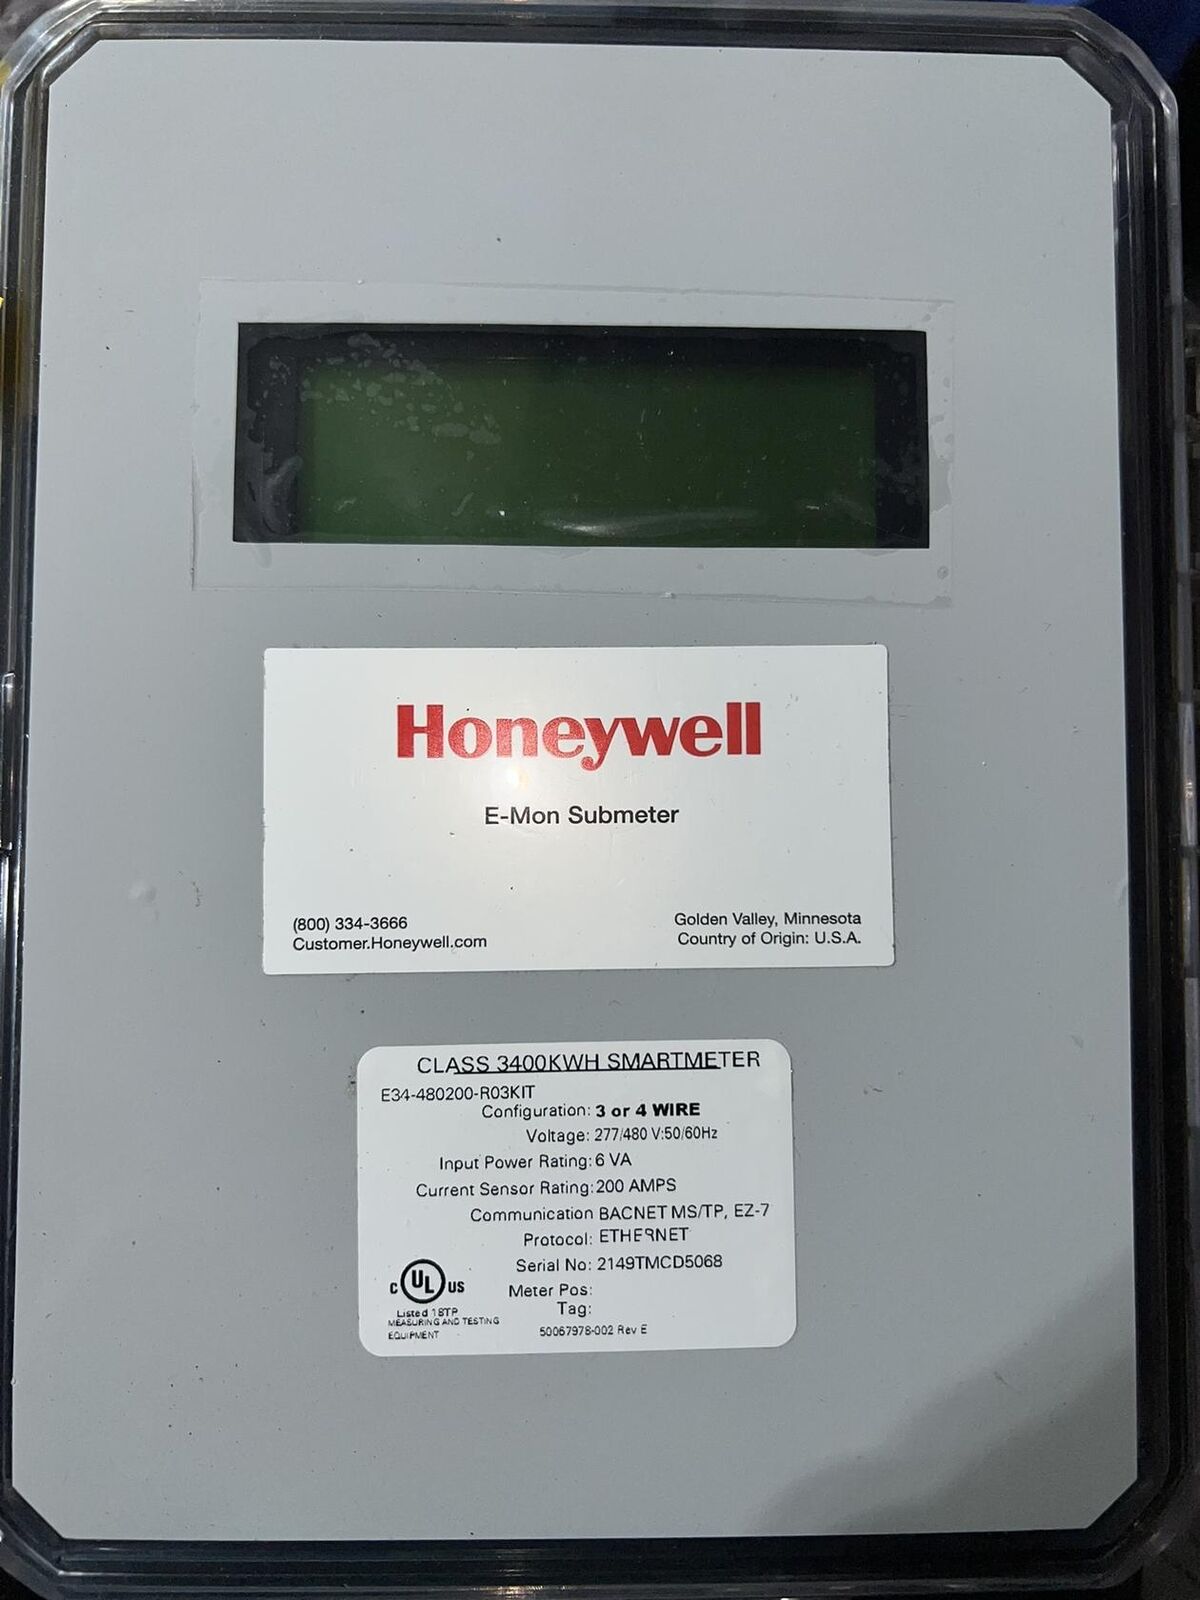 Honeywell E34-480400-R03KIT / Class 3400 kWh Submeter, 480V, 400A, NEMA 4X